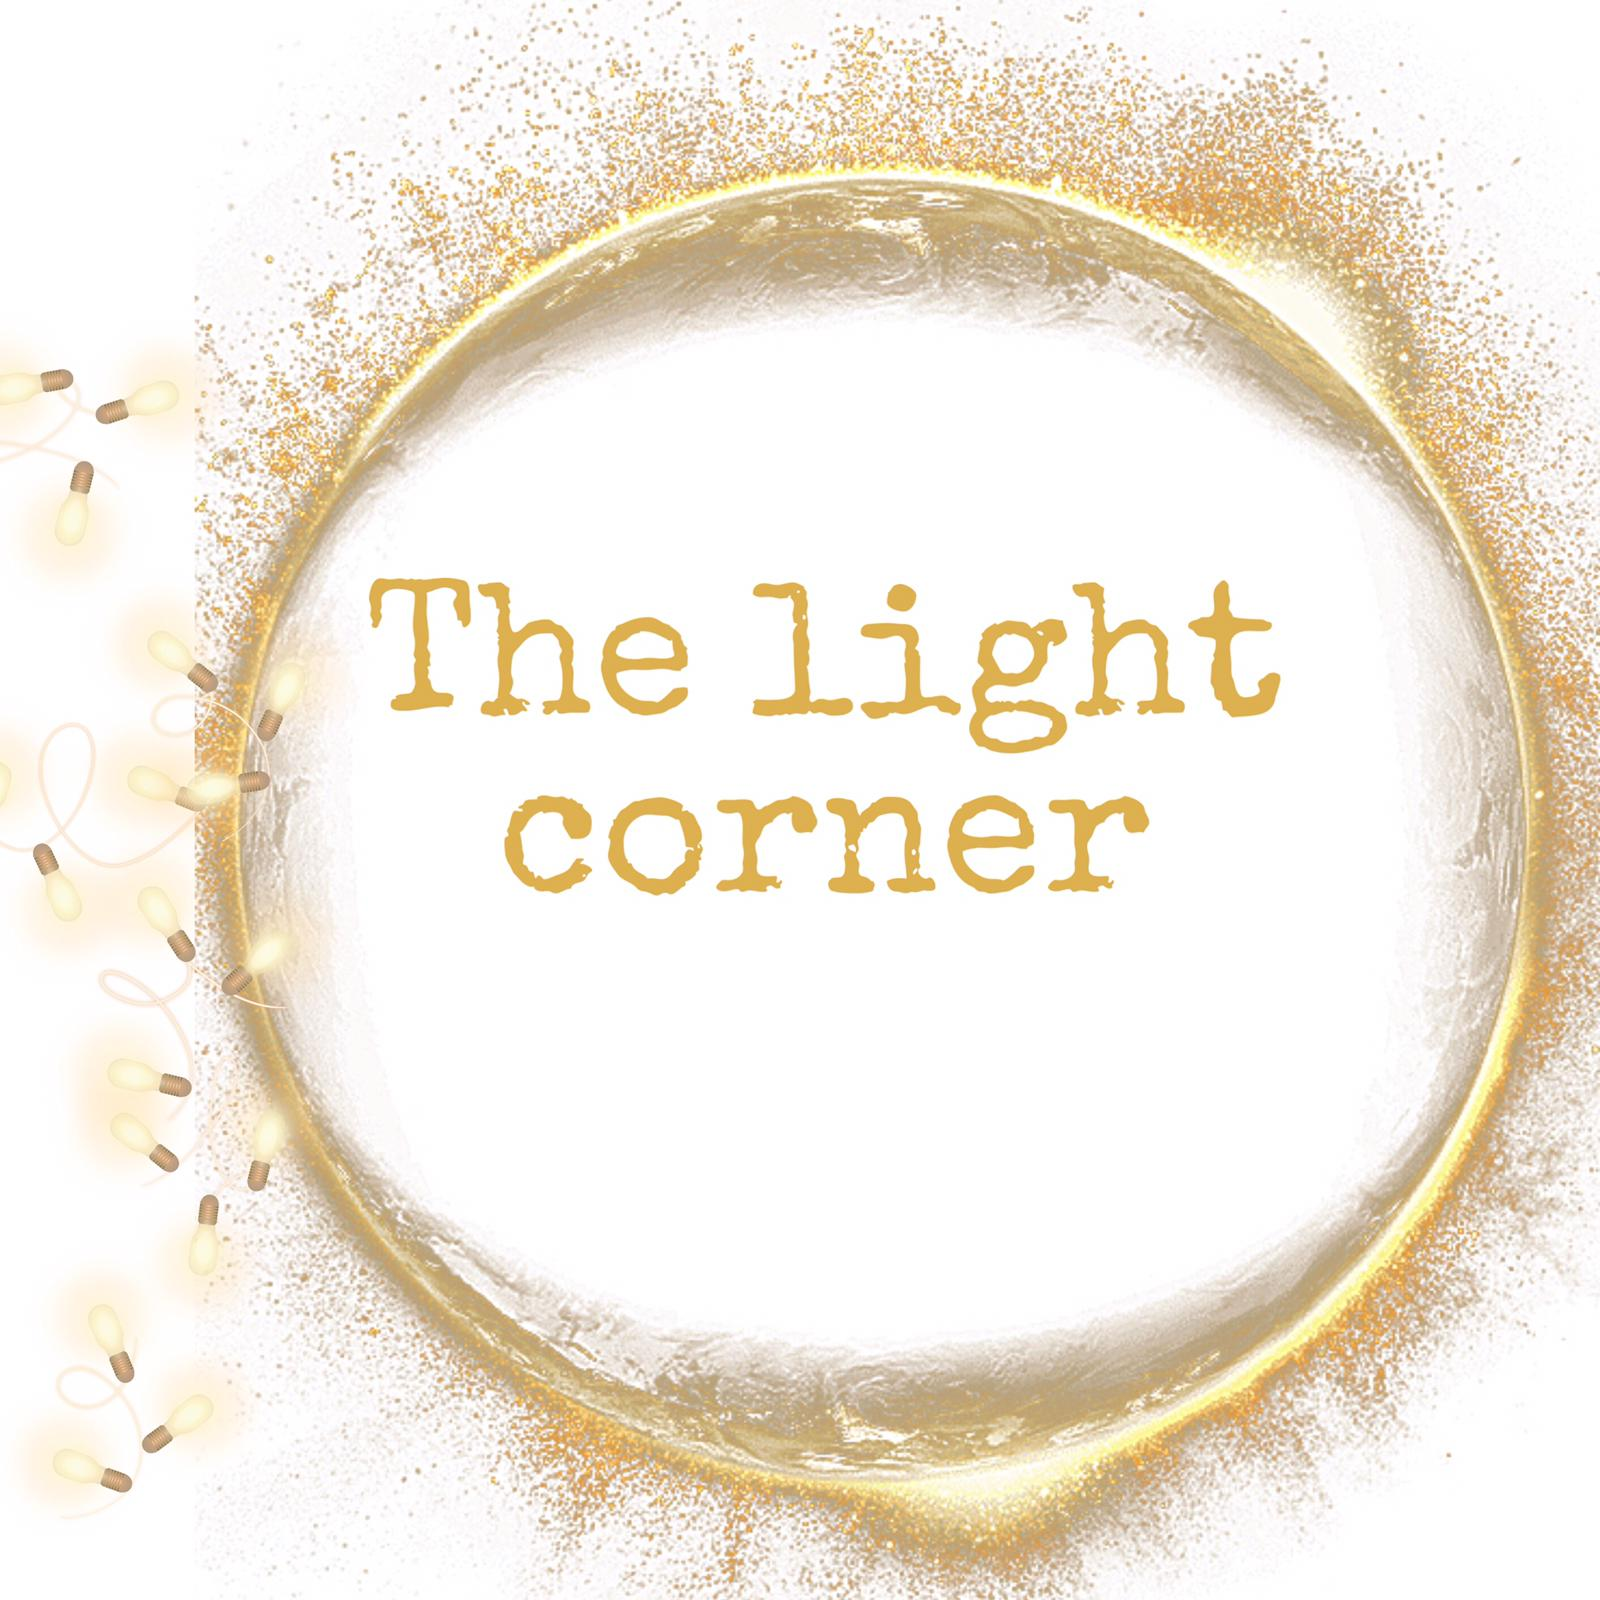 The light corner